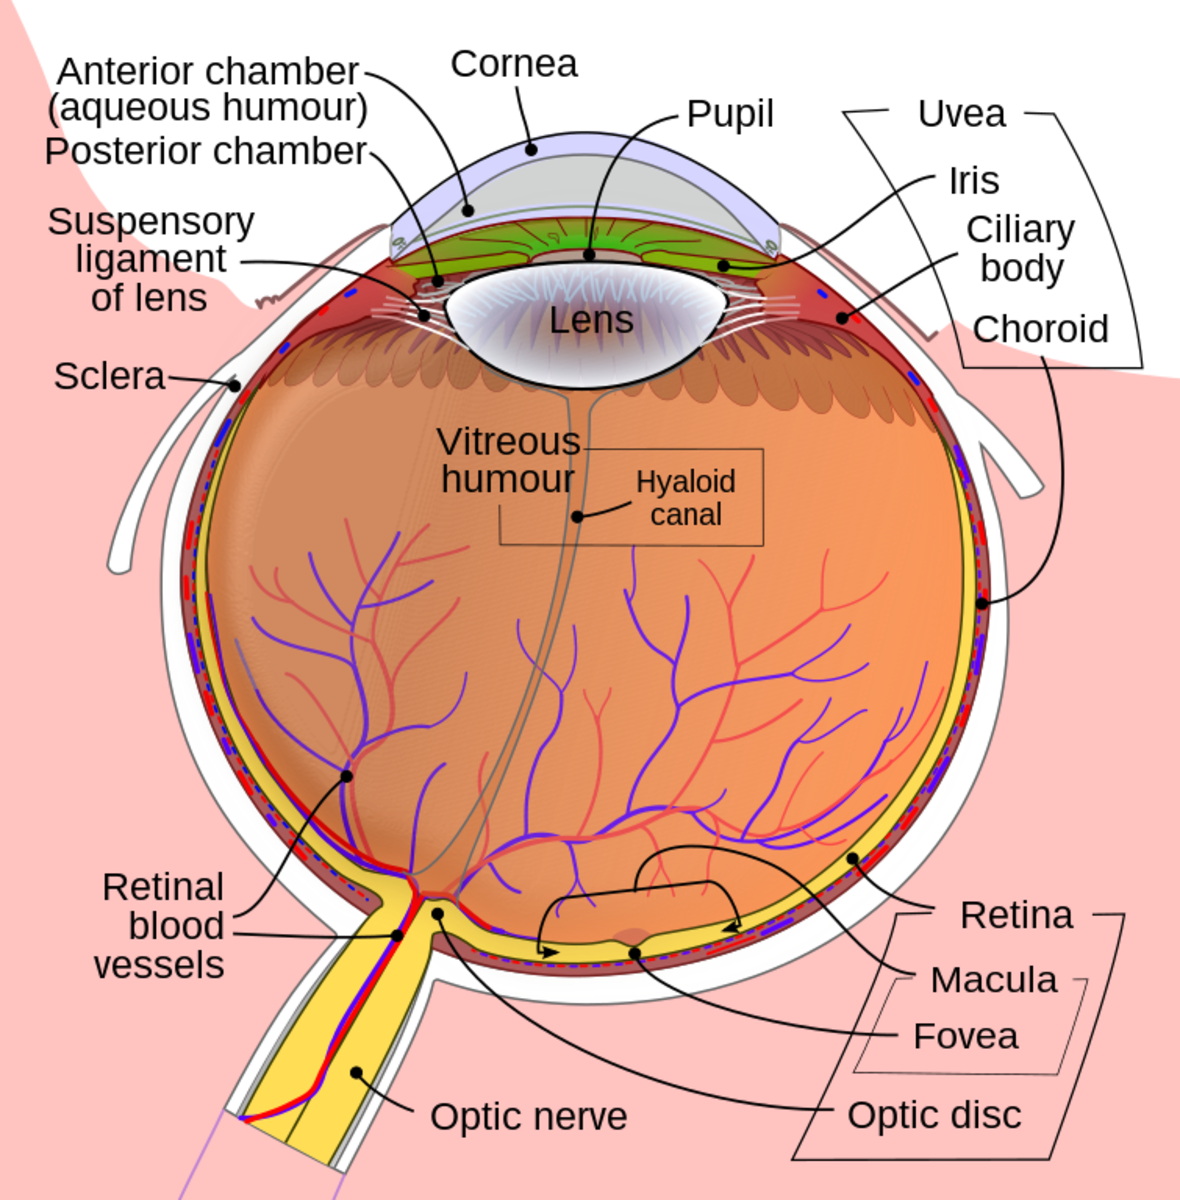 Schematic diagram of the human eyeball